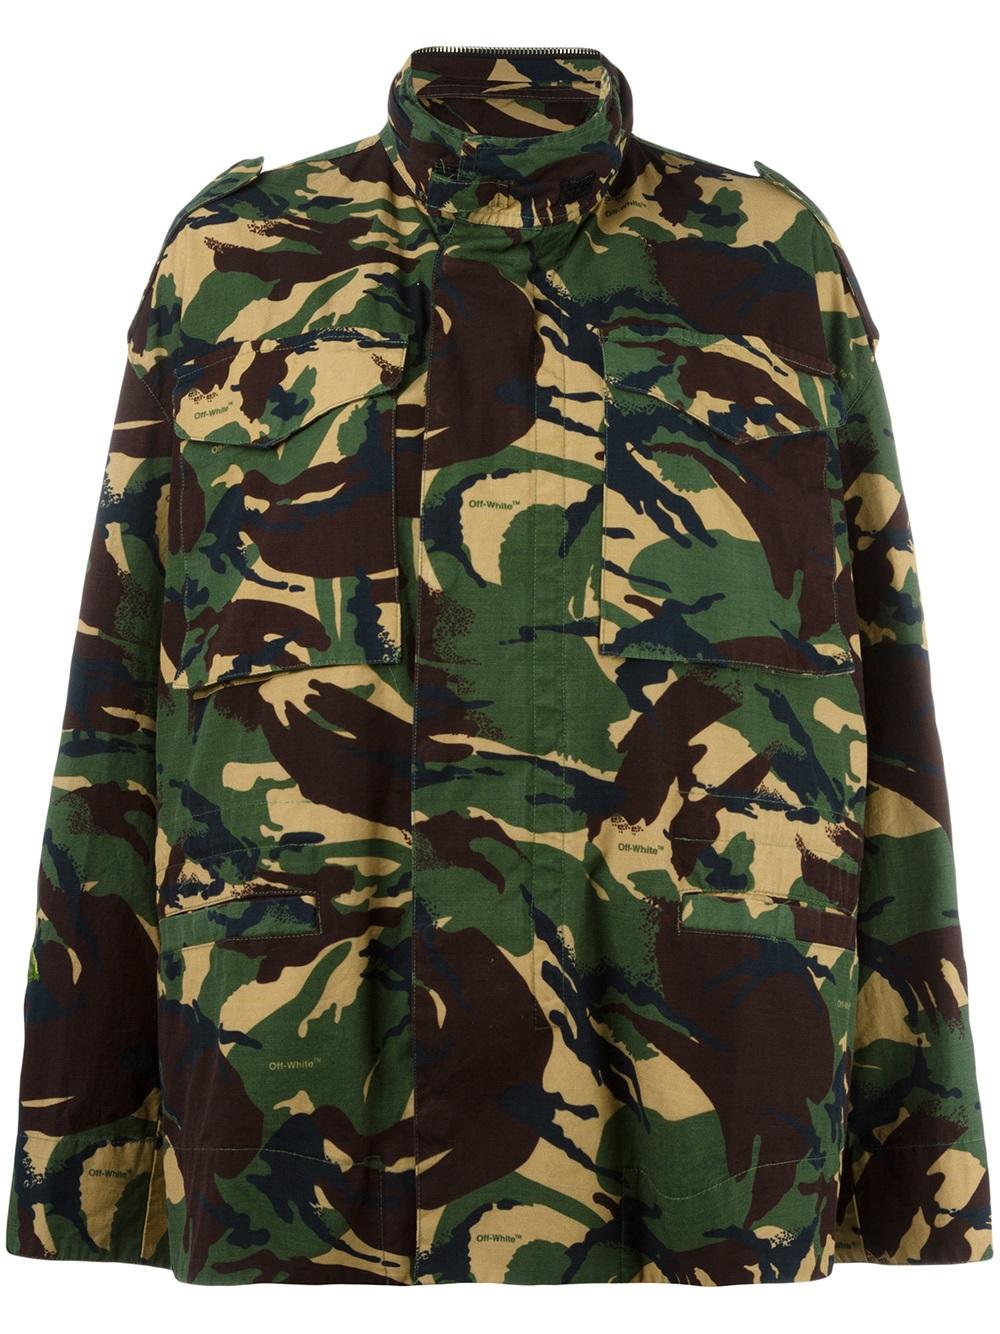 Off-White camouflage print jacket M65 Women Clothing Military Jackets